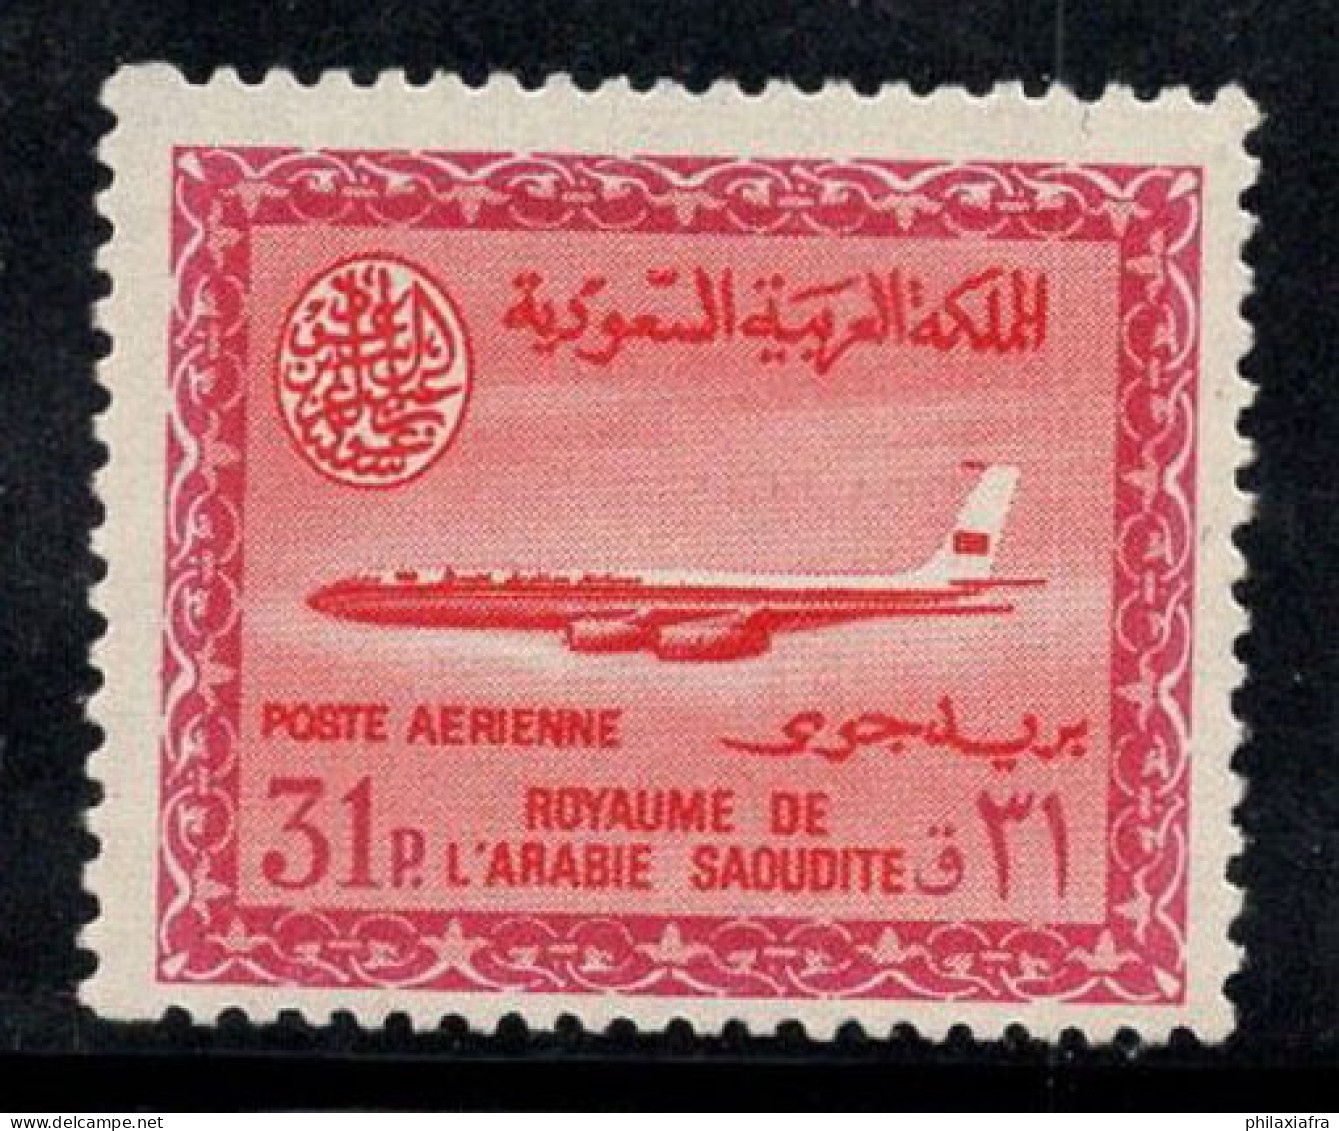 Arabie Saoudite 1965-72 Mi. 265 Neuf ** 100% Poste Aérienne 31 Pia, Boeing 720 B - Saoedi-Arabië